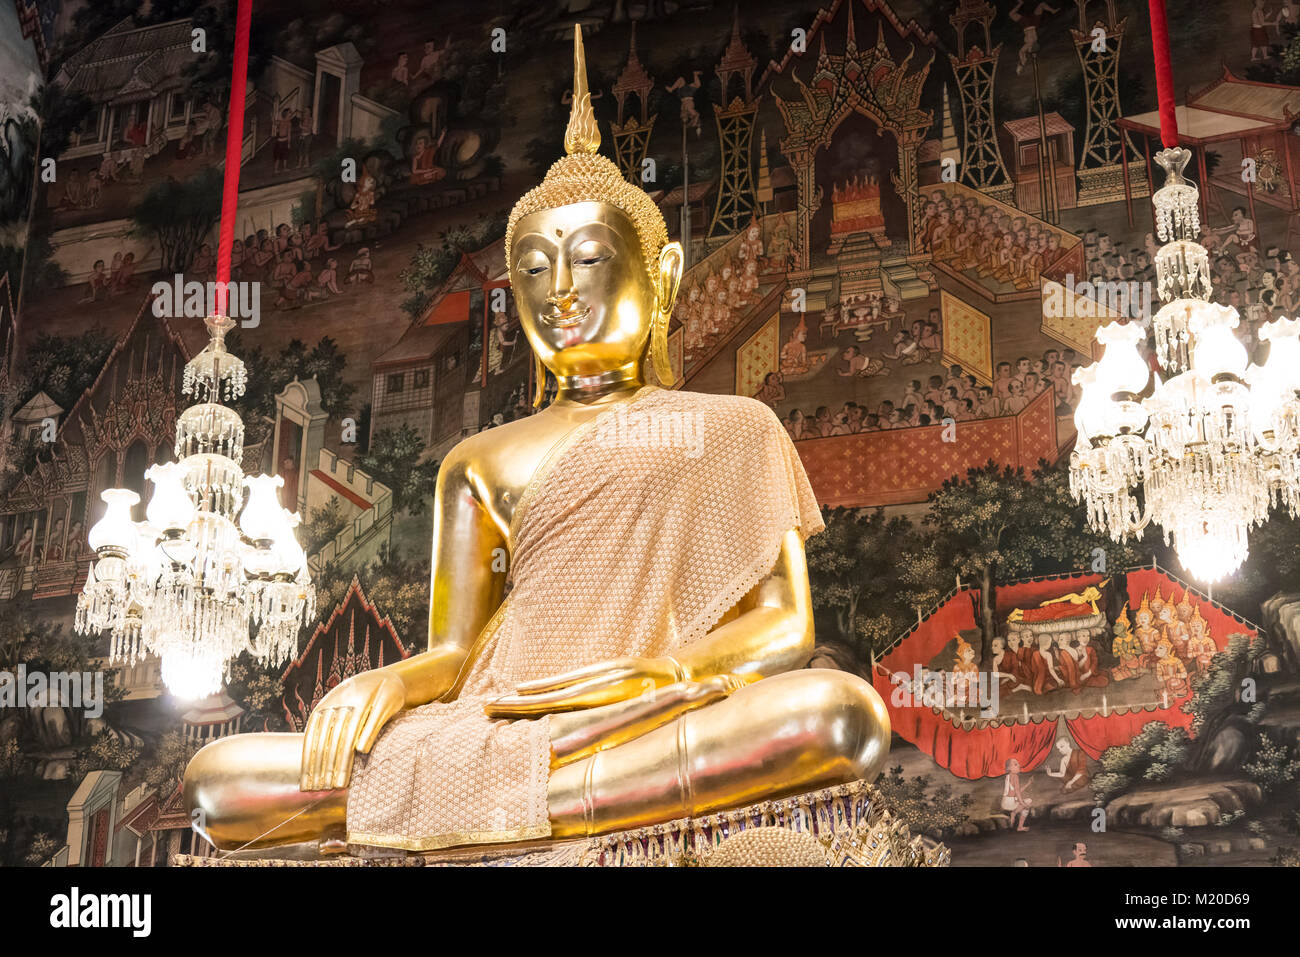 A golden statue of Buddha in Wat Arun temple, Bangkok, Thailand Stock Photo